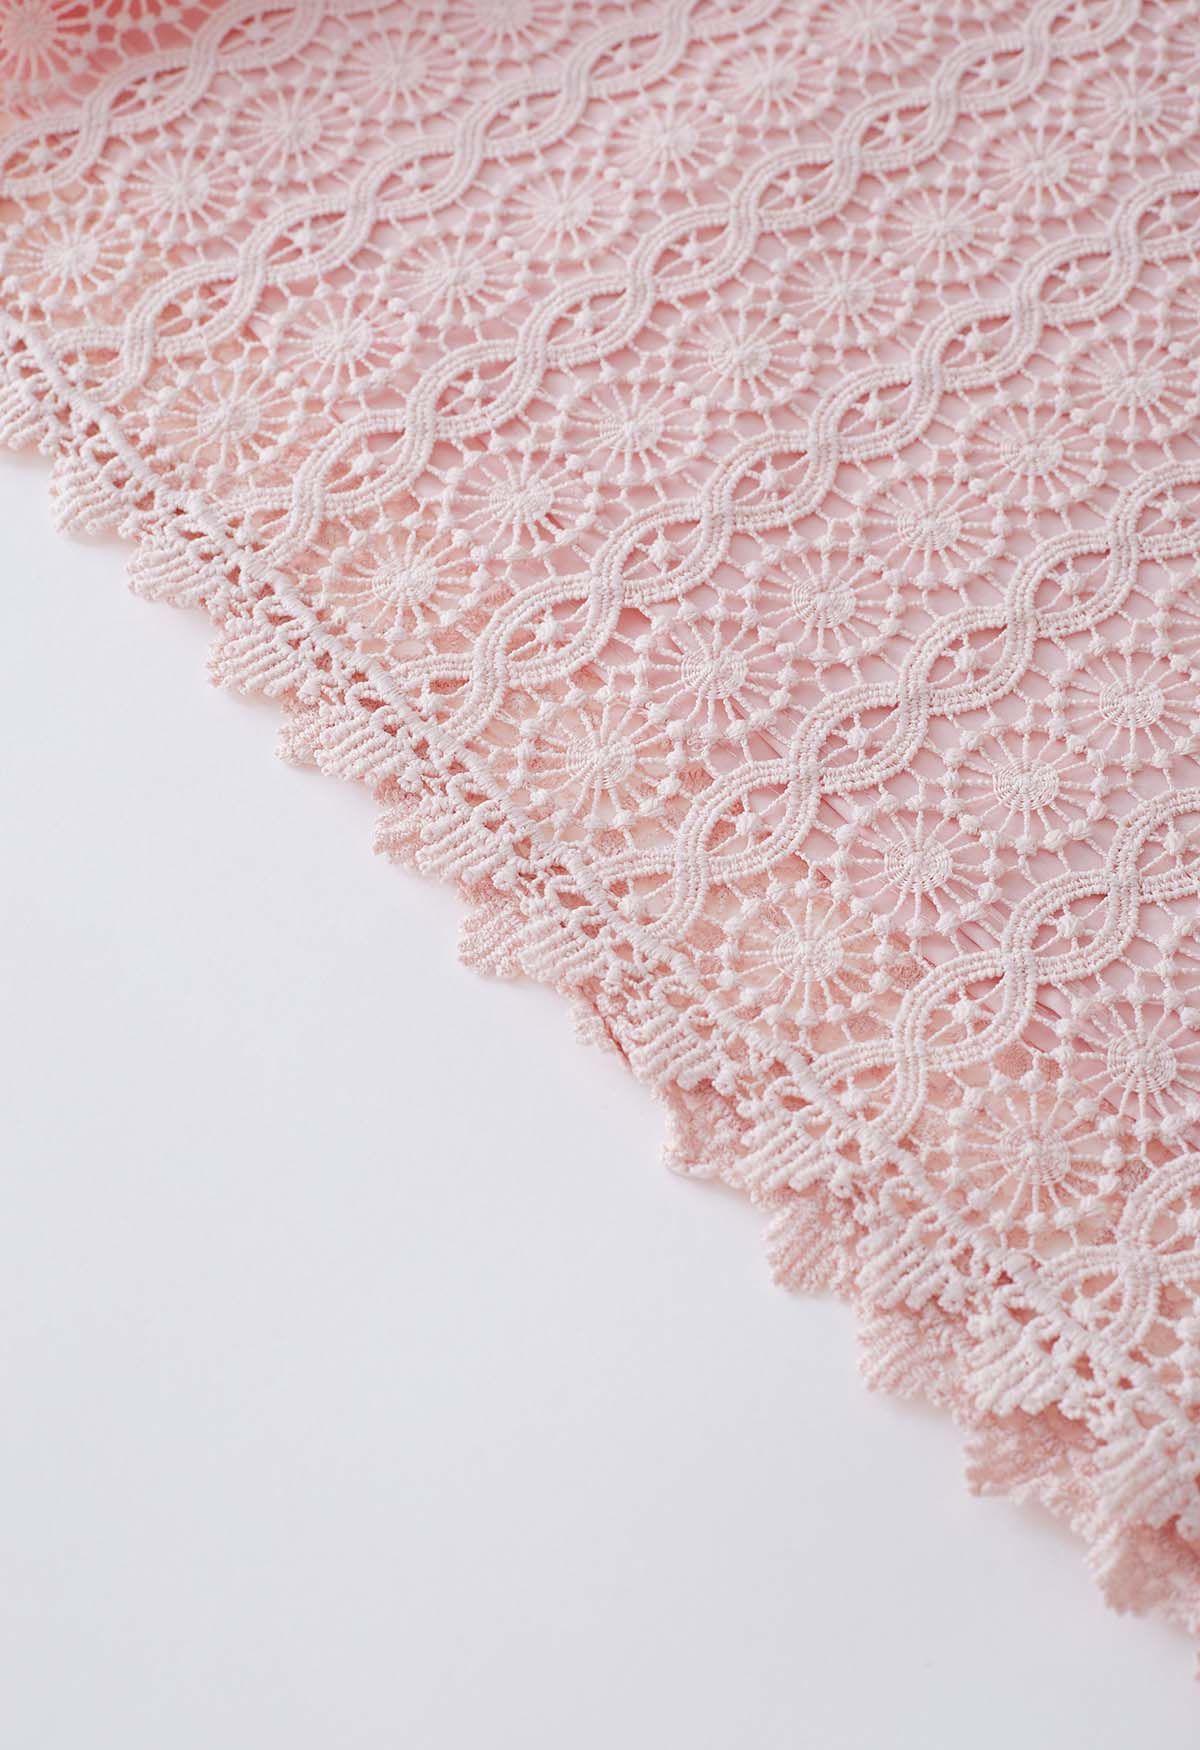 Top de manga corta con burbujas de crochet completo en rosa